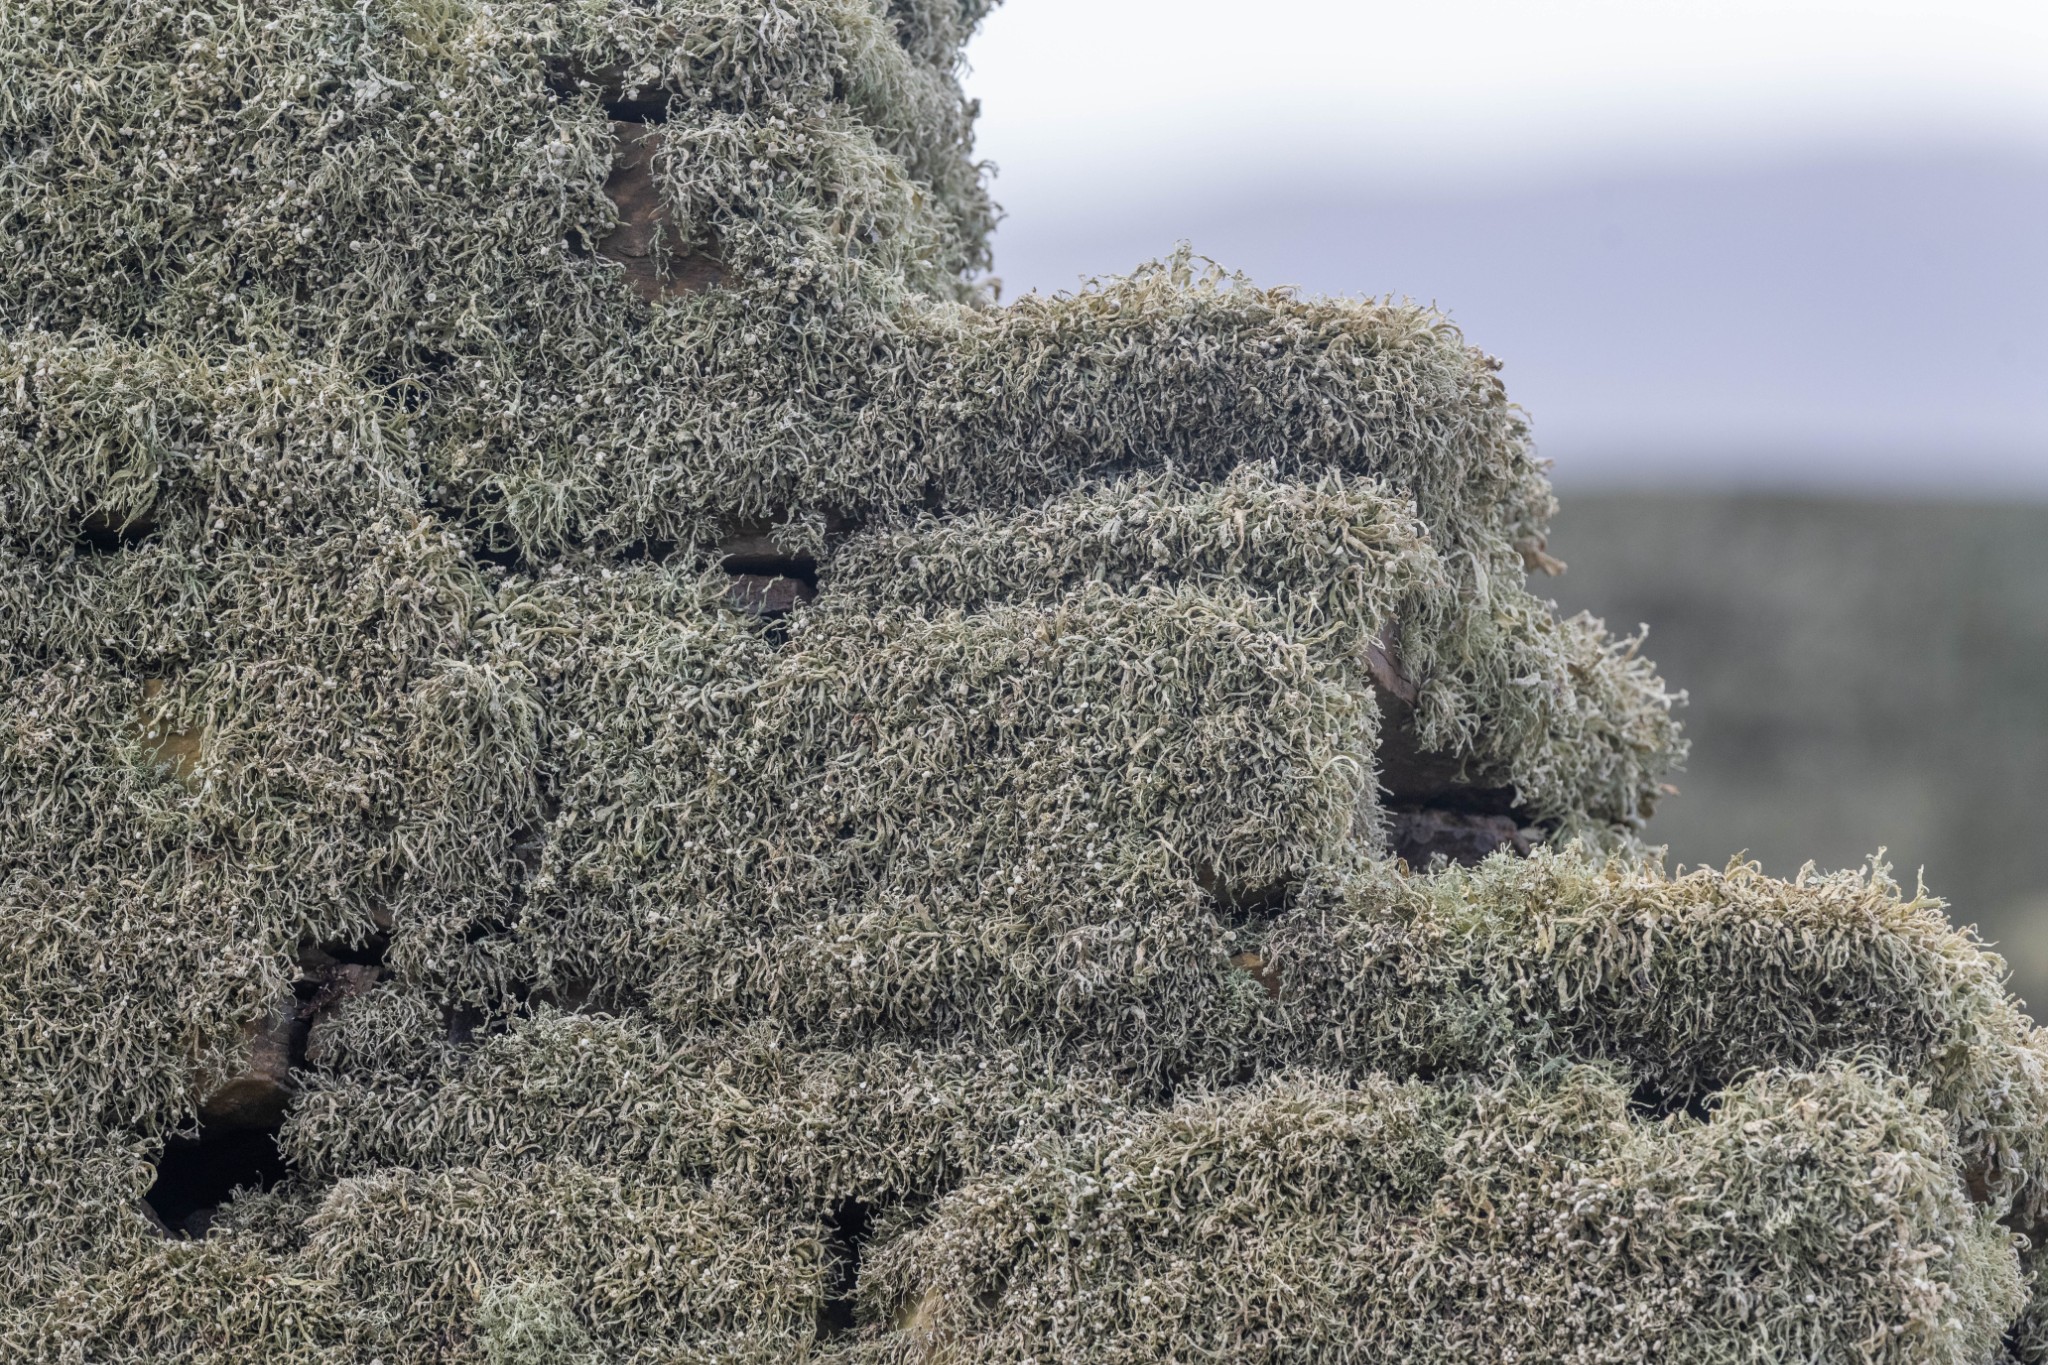 Ramalina siliquosa lichen in Rousay, Orkney - image by Raymond Besant